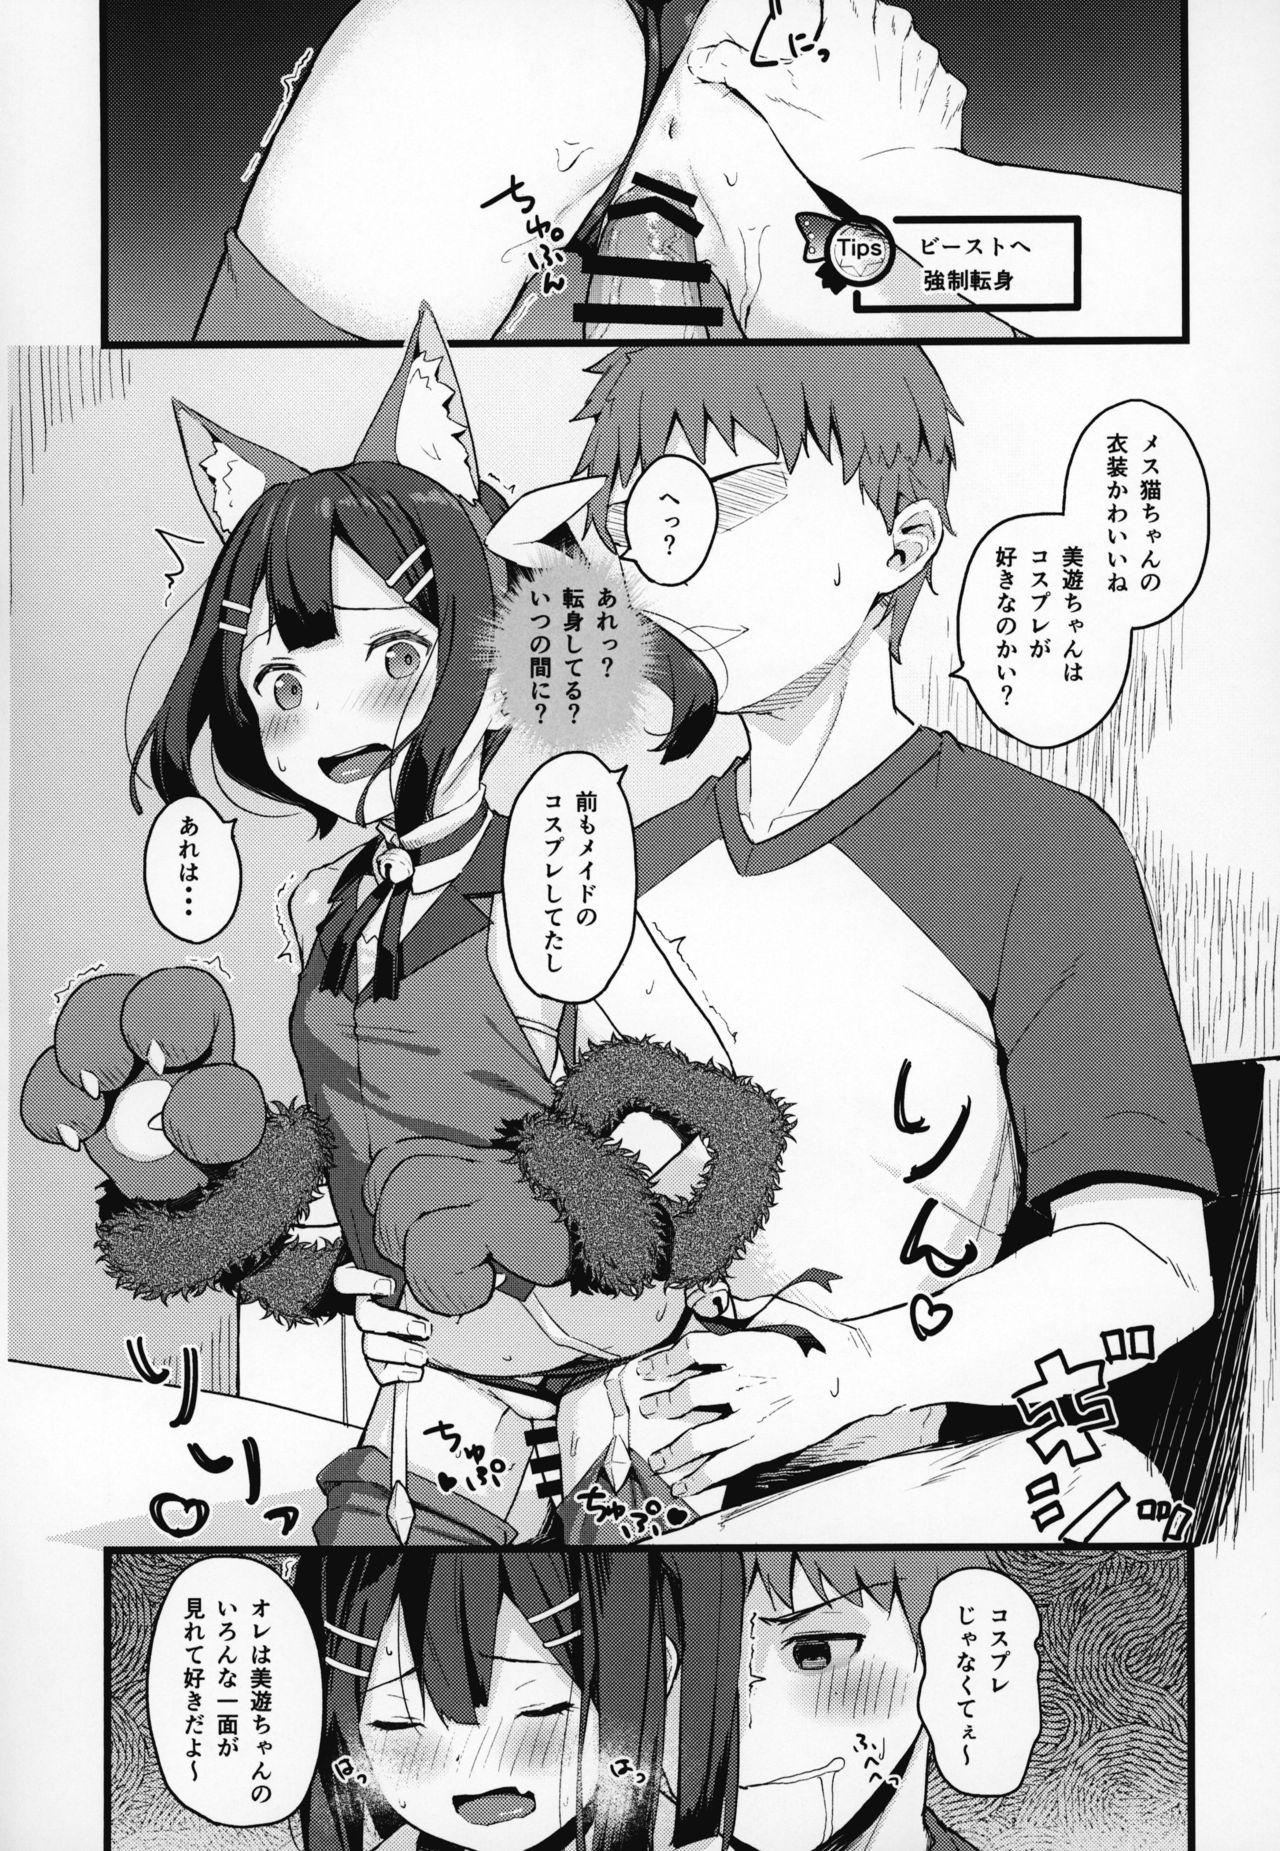 Bucetinha Miyu-chan no Install! Sweet Sister! - Fate kaleid liner prisma illya Anime - Page 11